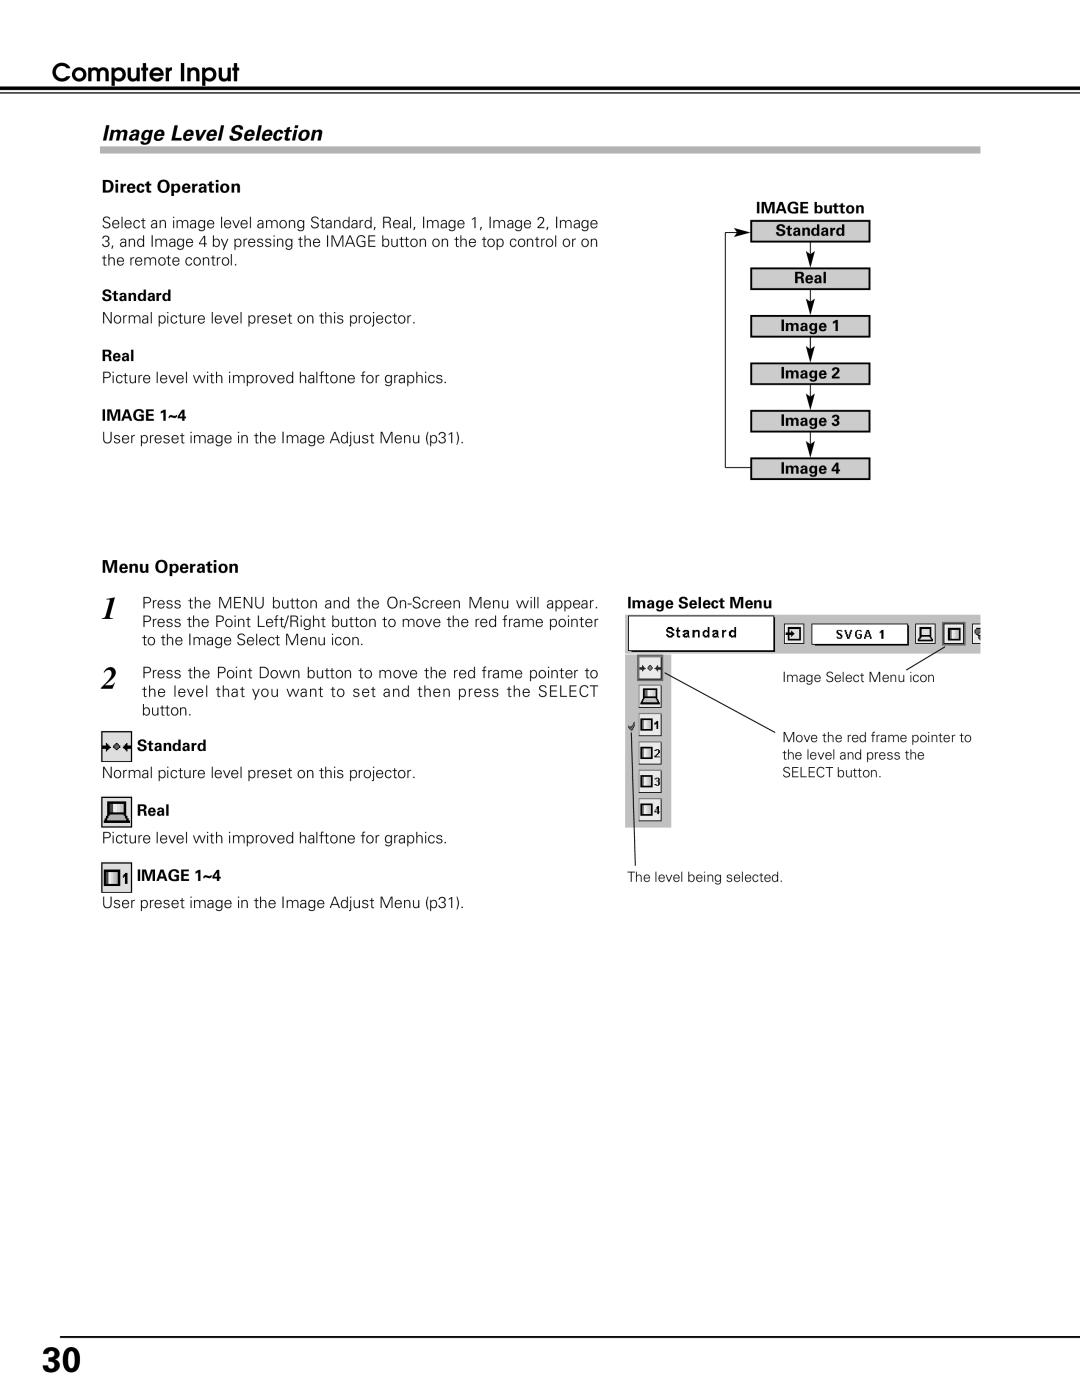 Black Box LC-XE10 instruction manual Image Level Selection, Computer Input, Standard, Real, IMAGE 1~4, Image Select Menu 